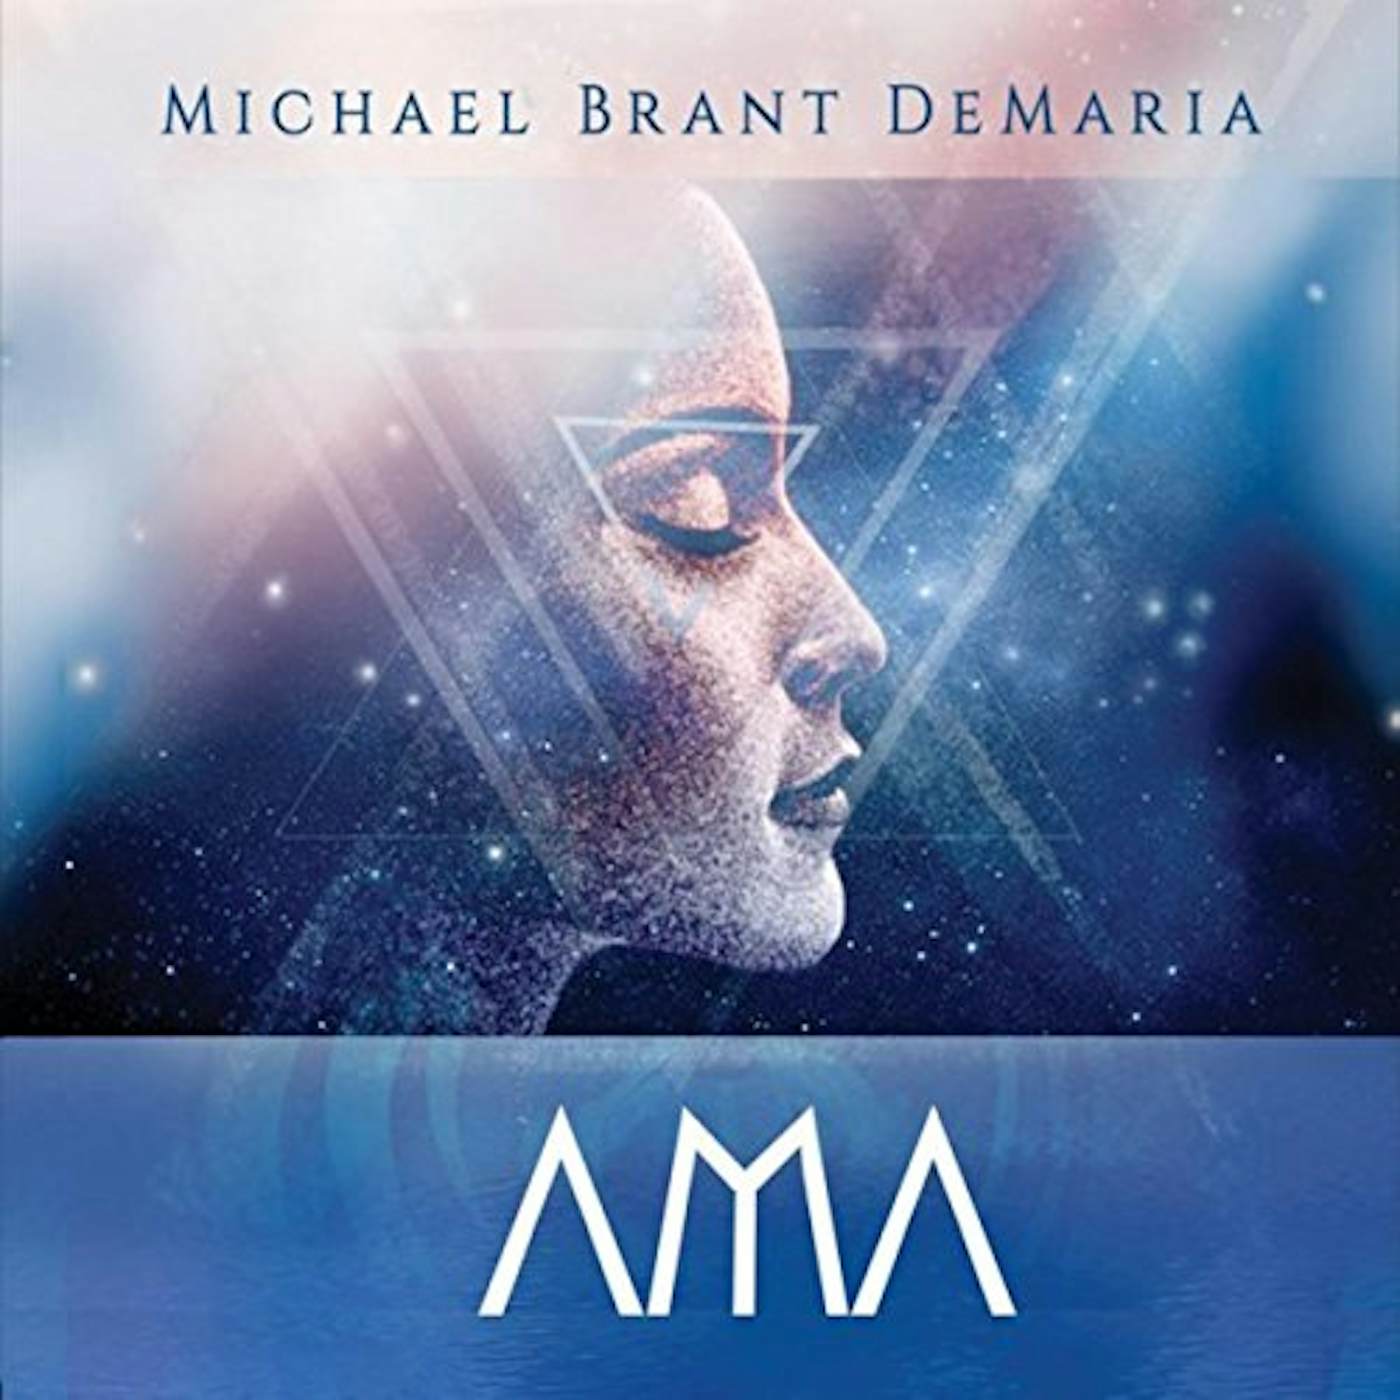 Michael Brant DeMaria AMA CD